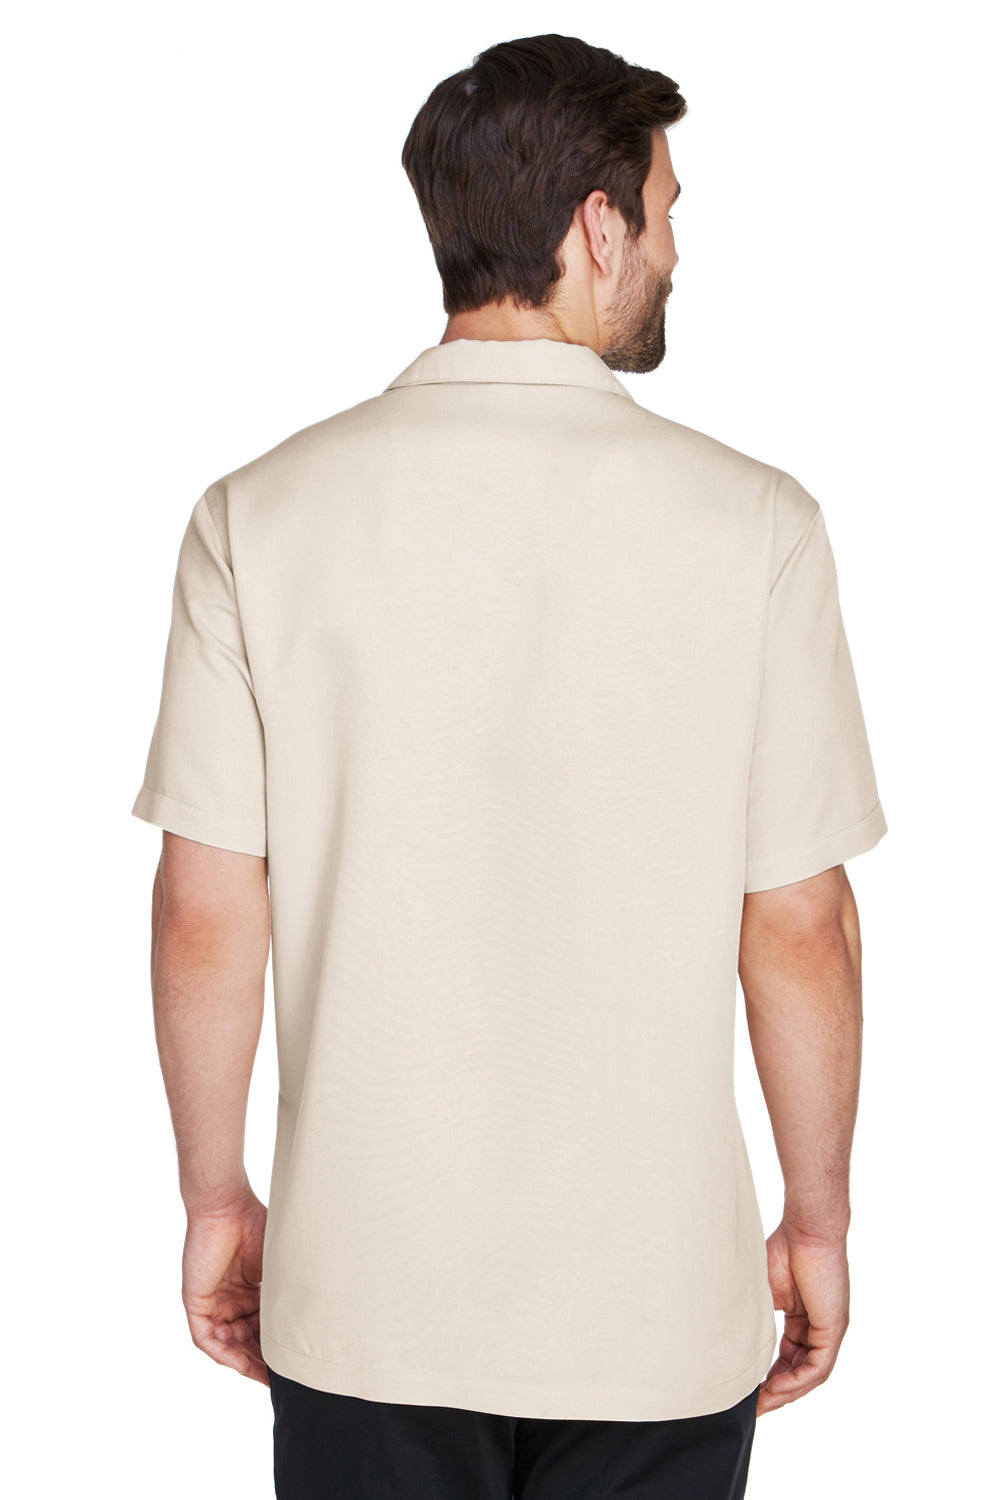 UltraClub 8980 Mens Cabana Breeze Short Sleeve Button Down Camp Shirt w/ Pocket Stone Brown Back